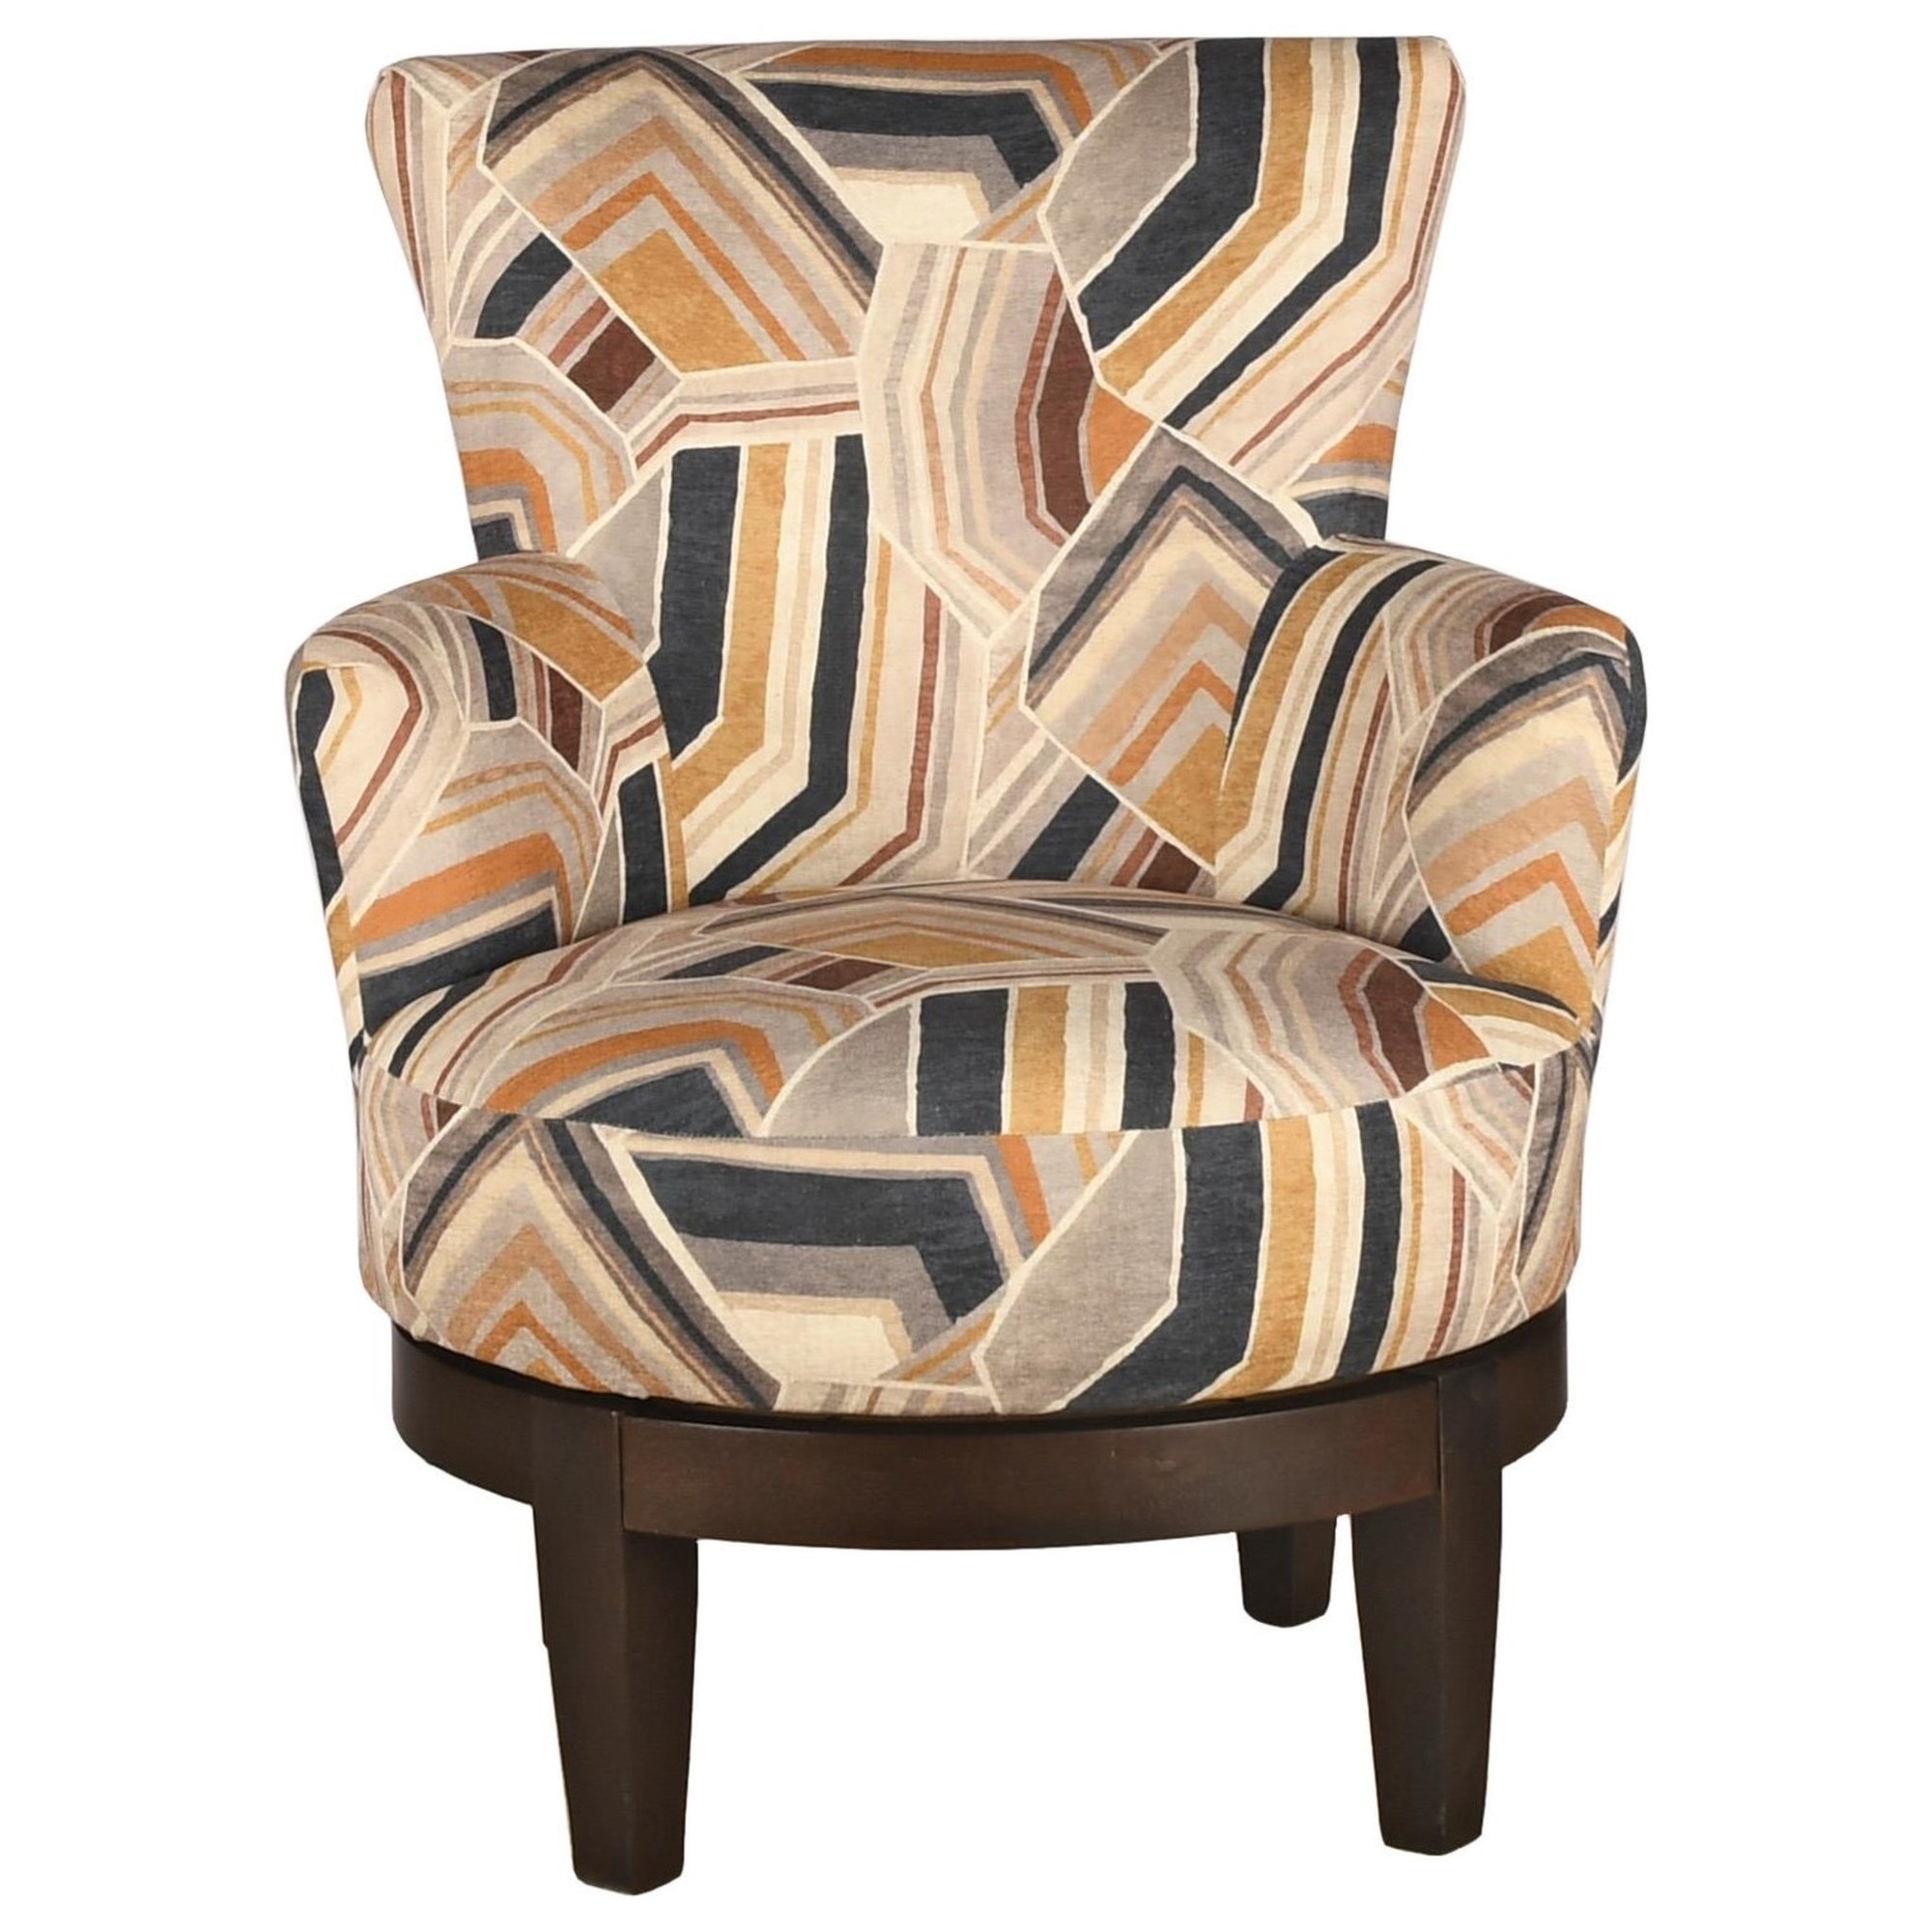 Geometric Patterned Swivel Chair